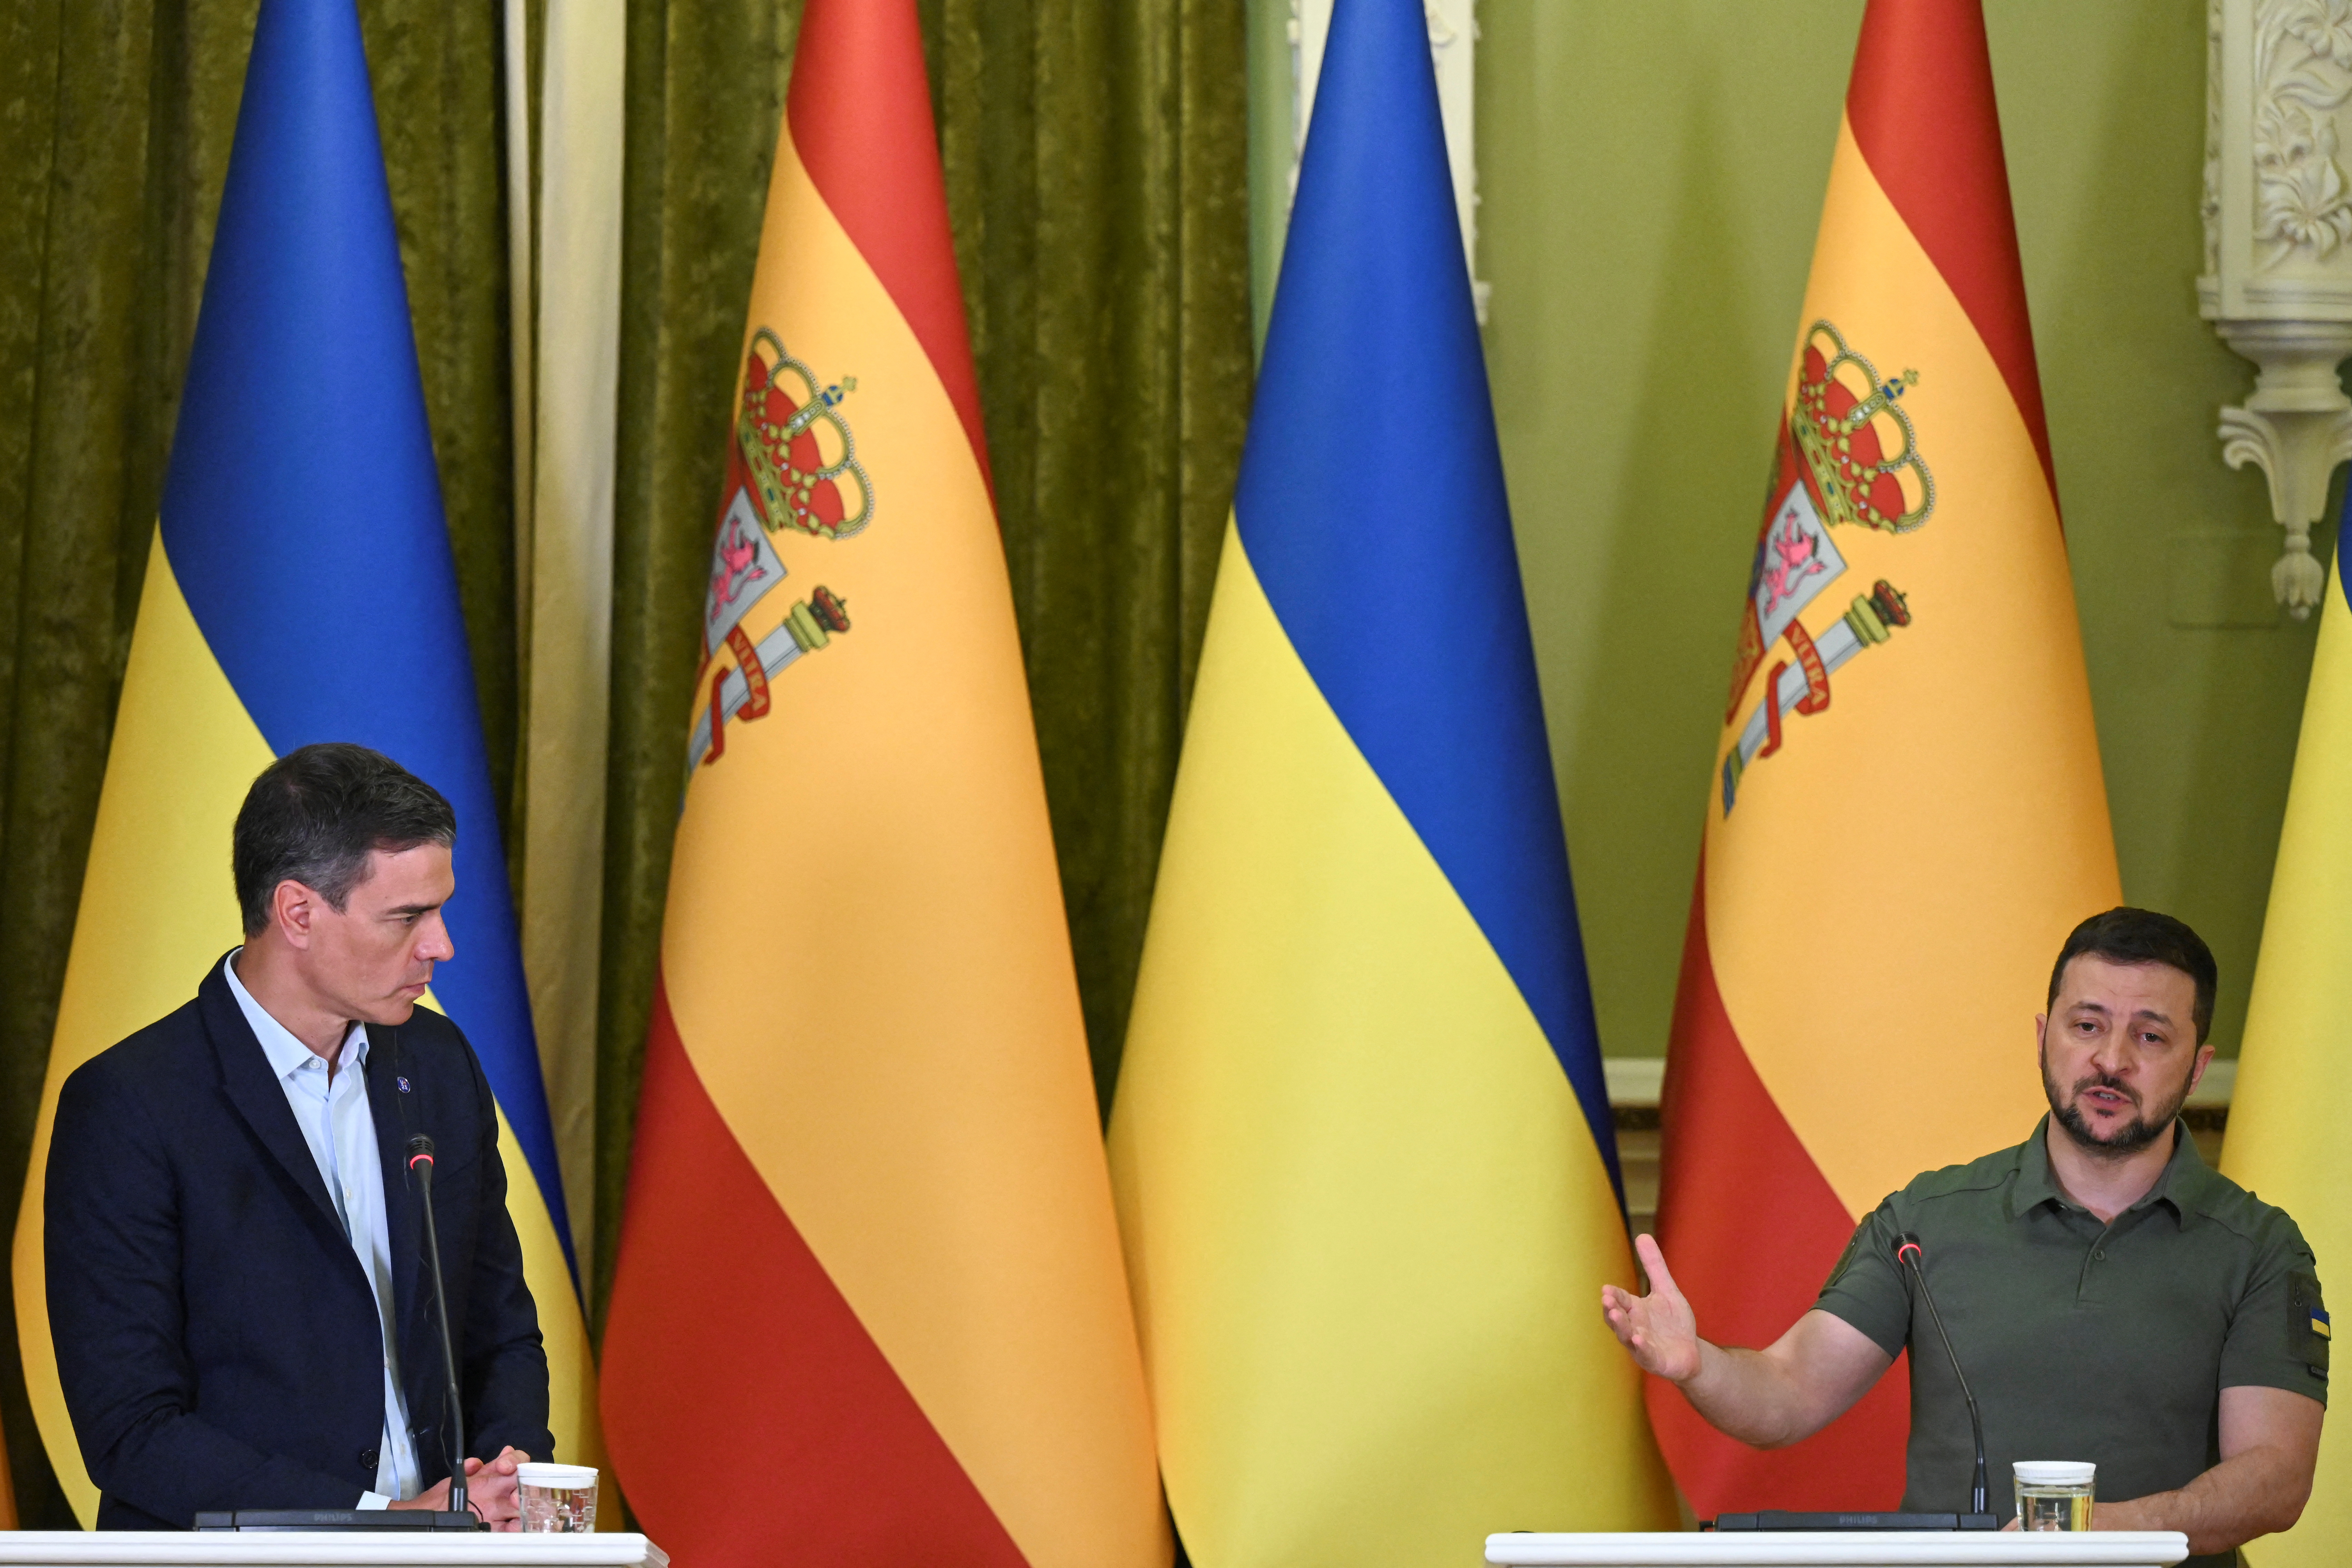 Spanish Prime Minister Sanchez and Ukraine's President Zelenskiy attend a press conference in Kyiv